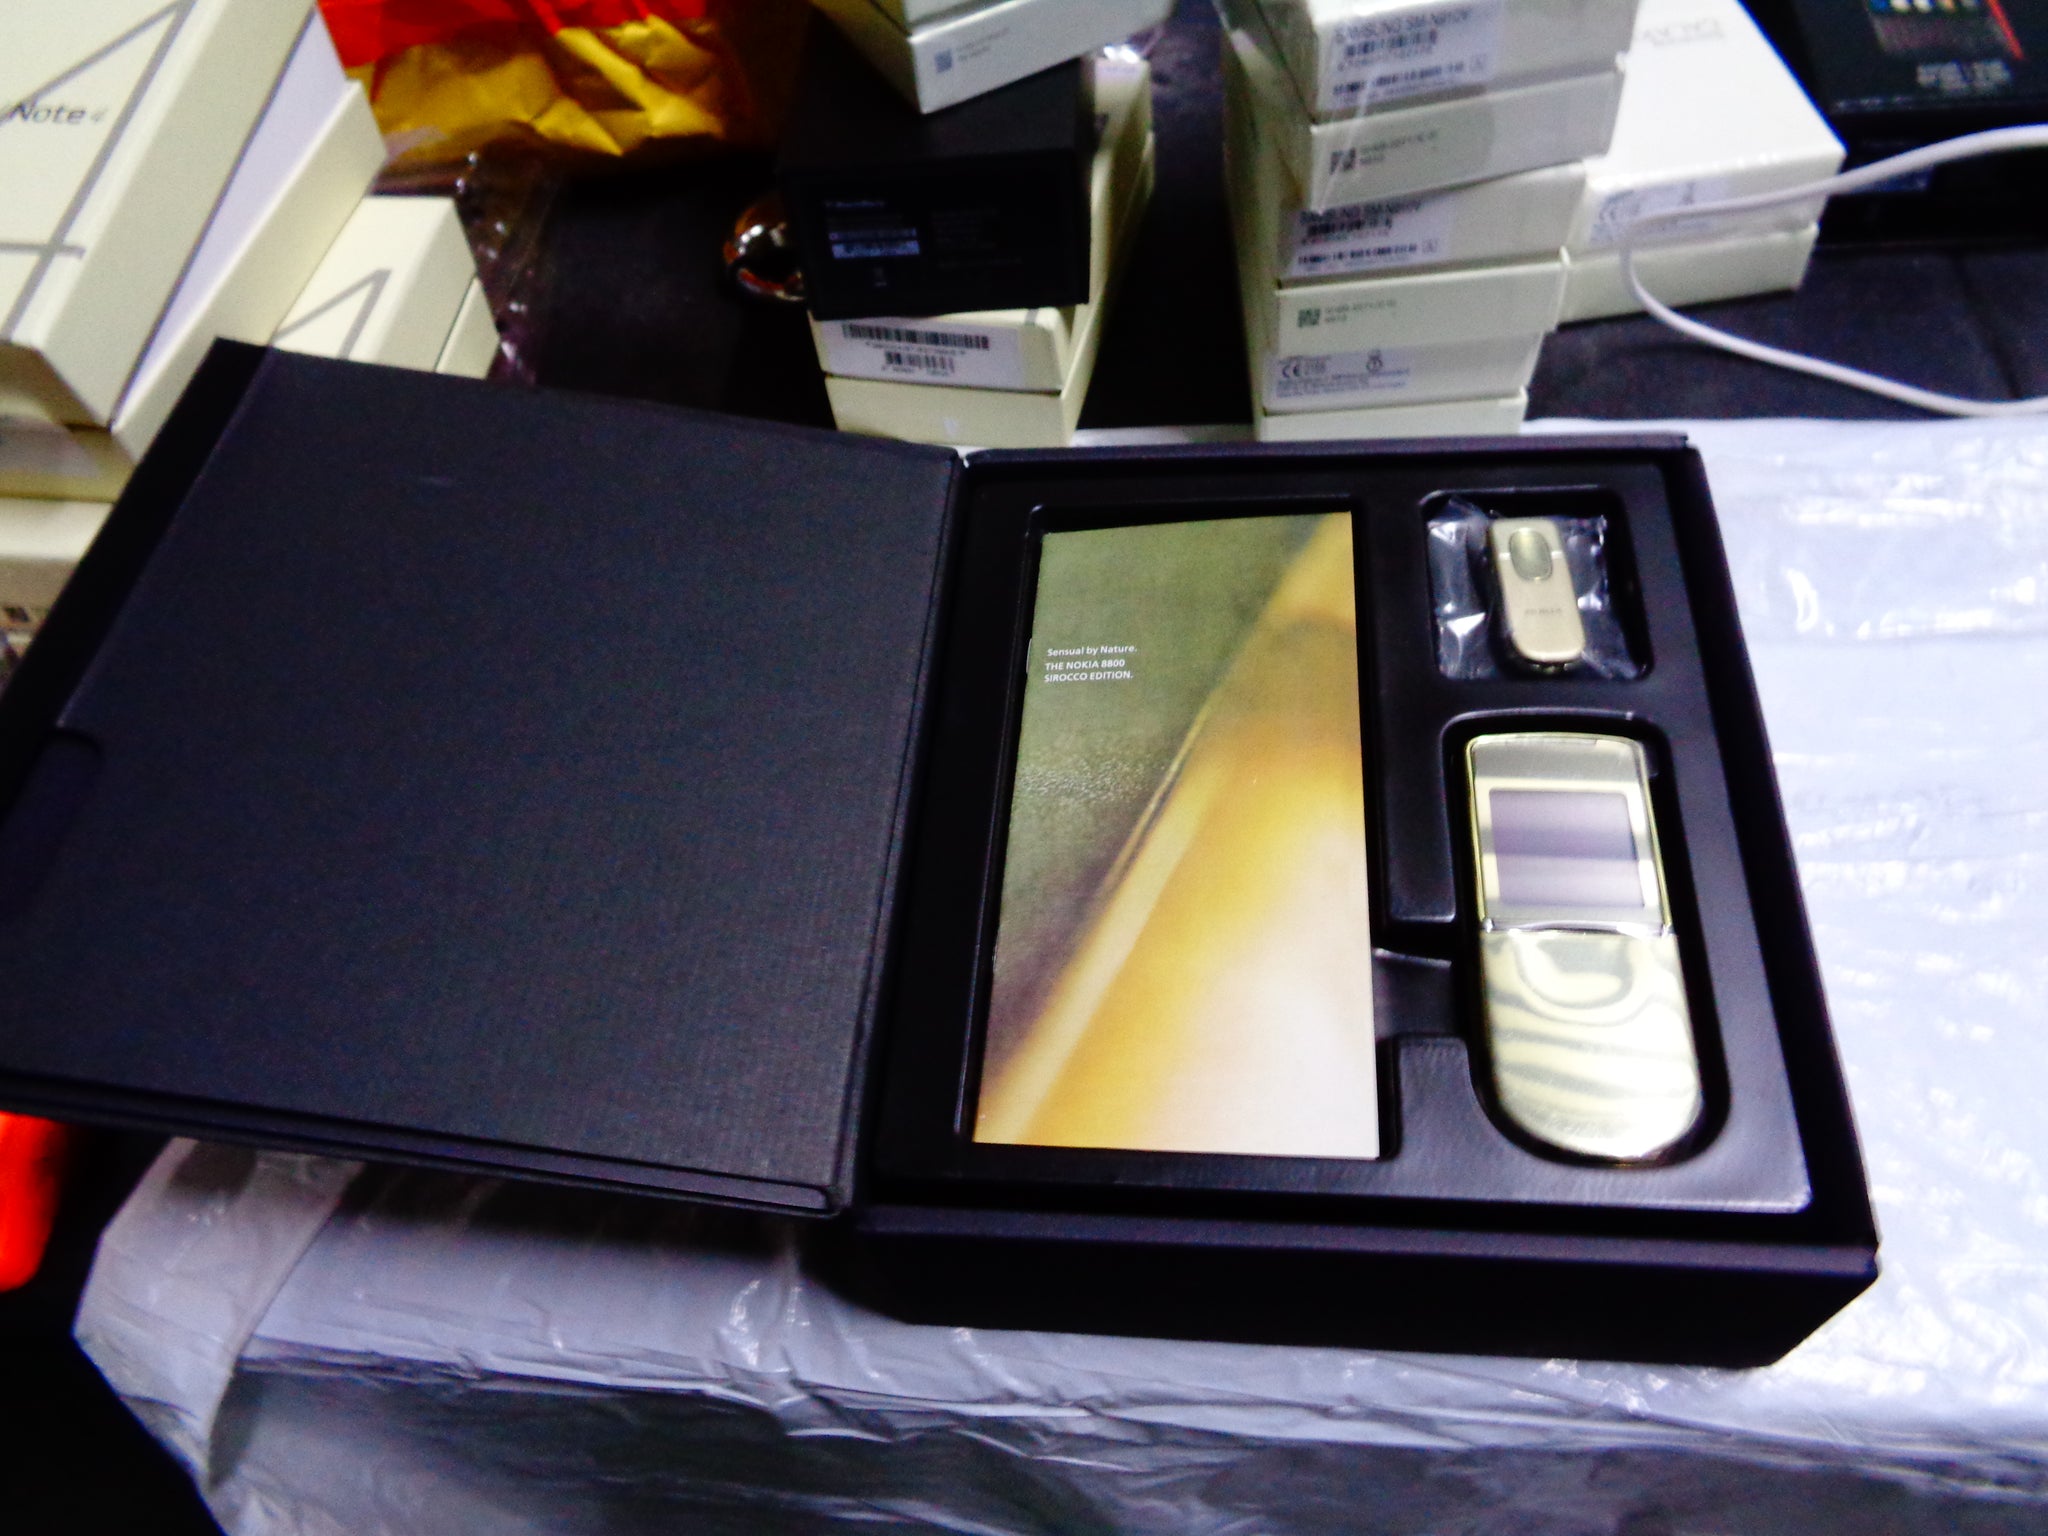  Nokia 8800 : Cell Phones & Accessories